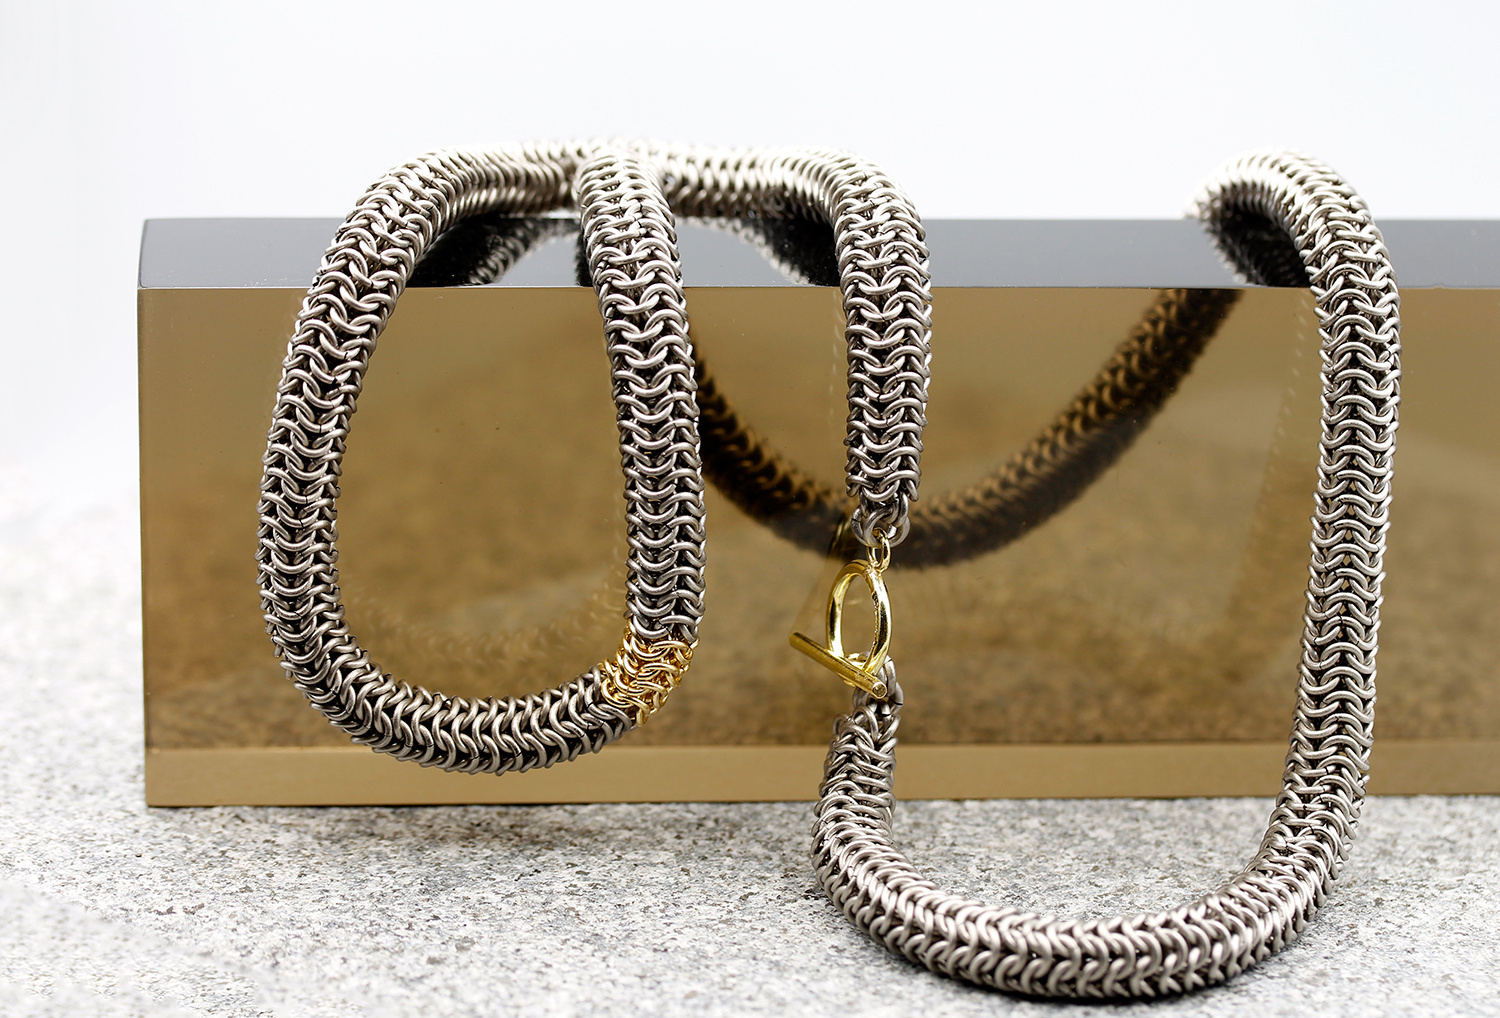 'Wrap-around' Bracelet/Necklace by Alison Evans